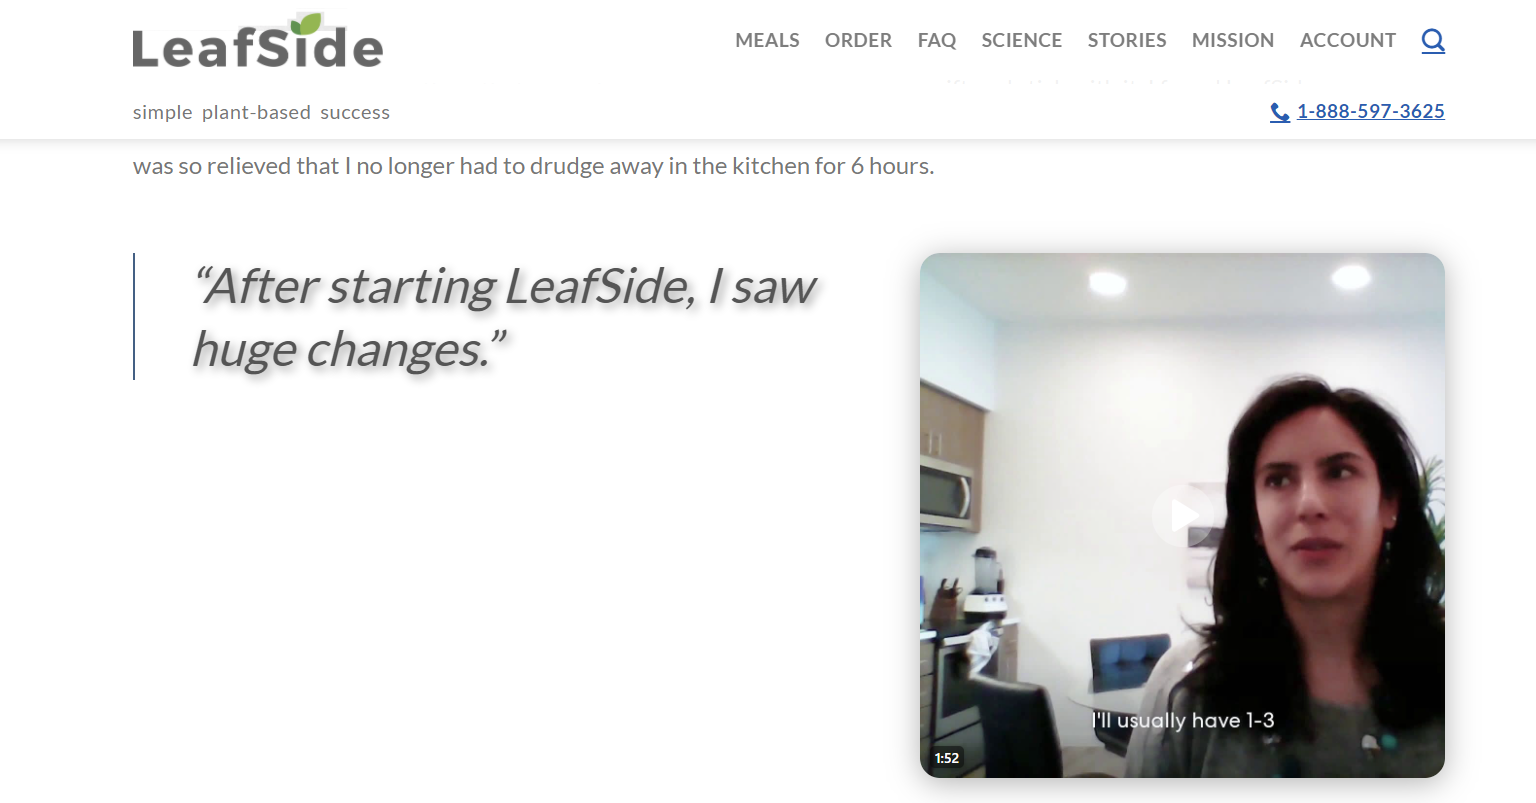 LeafSide simple plant-based success: Customer testimonial video example